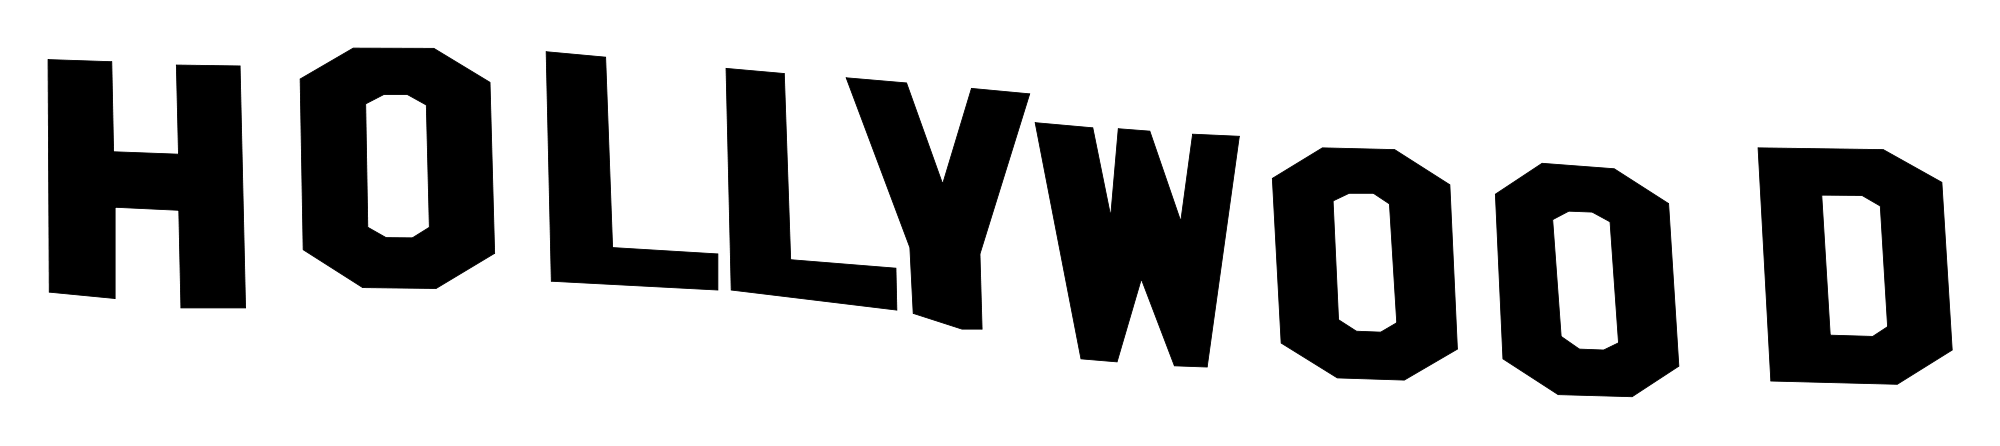 Hollywood Logo - LogoDix